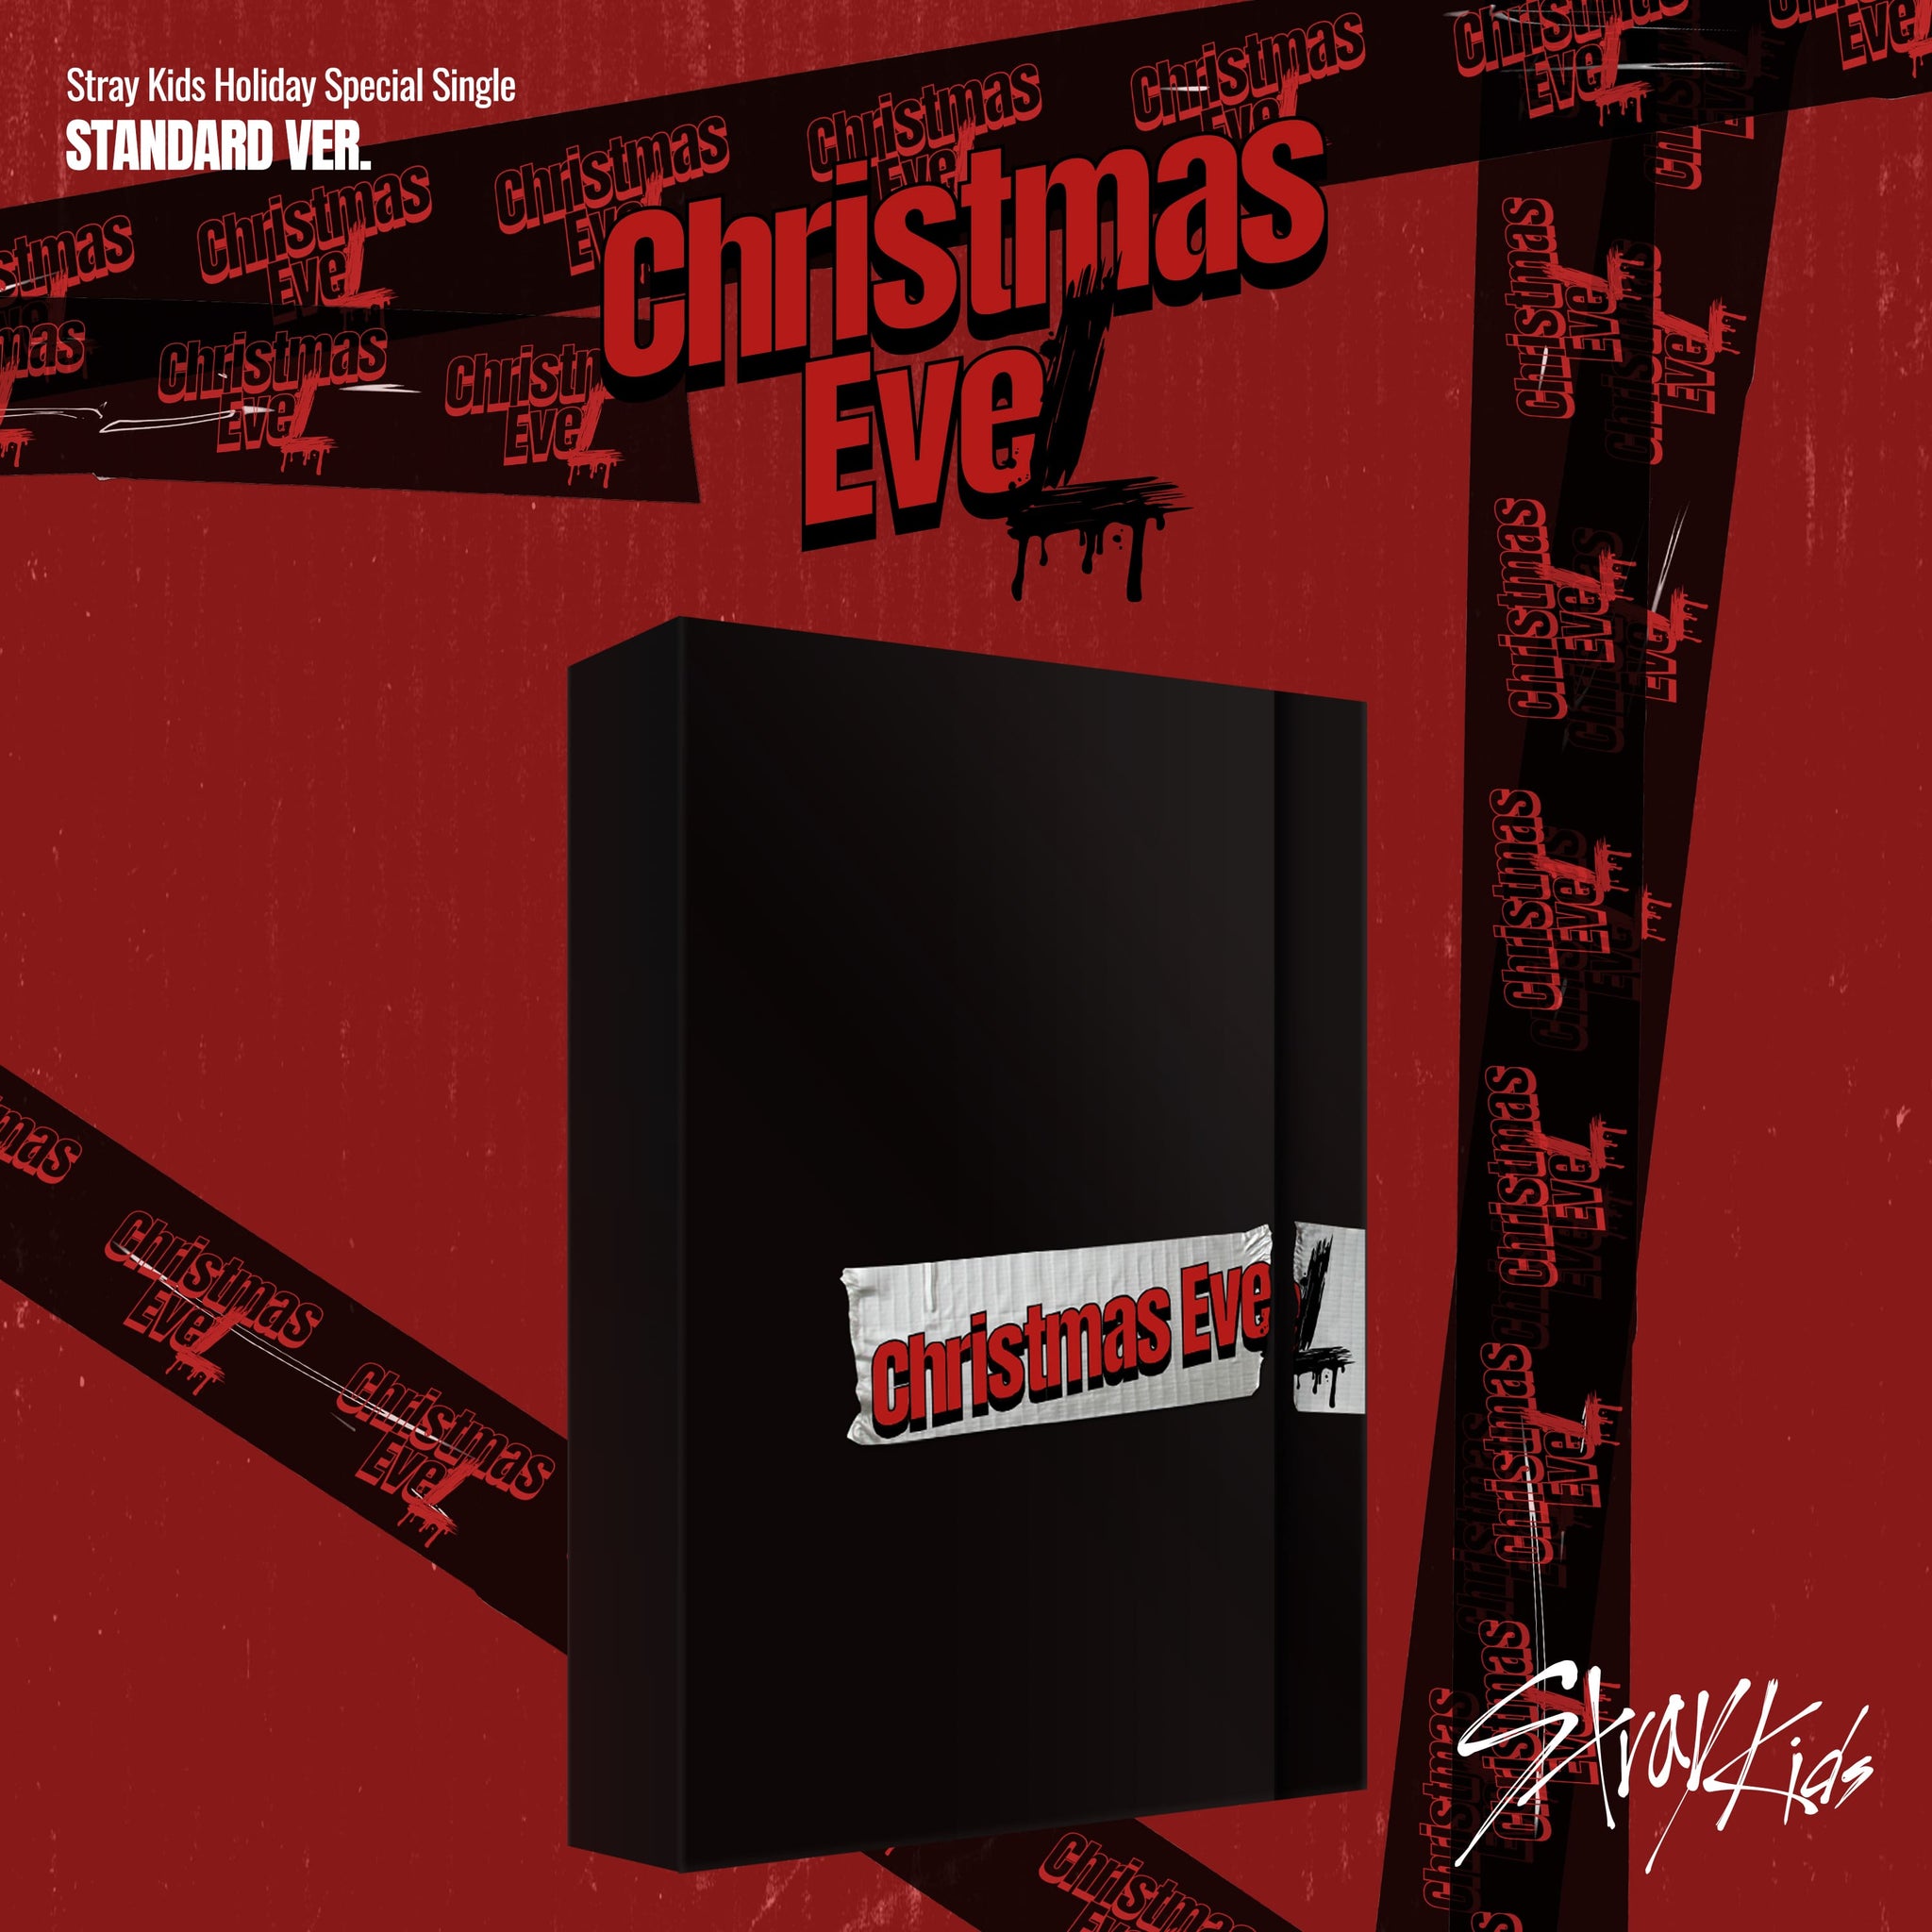 Stray Kids [Christmas EveL] Holiday Special Single (STANDARD VER.)